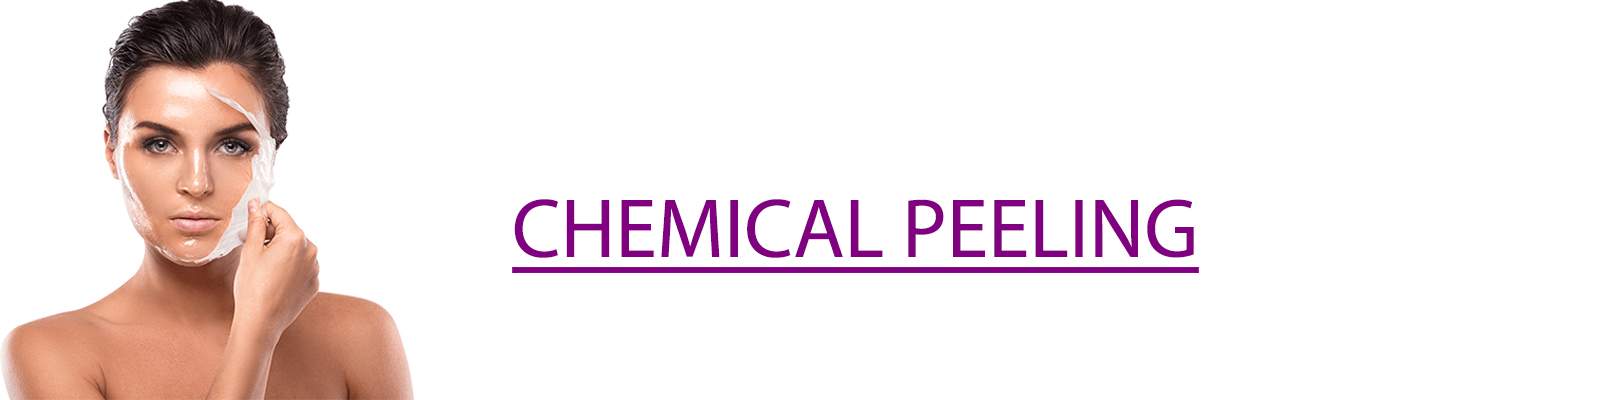 Chemical Peels Treatment in Delhi